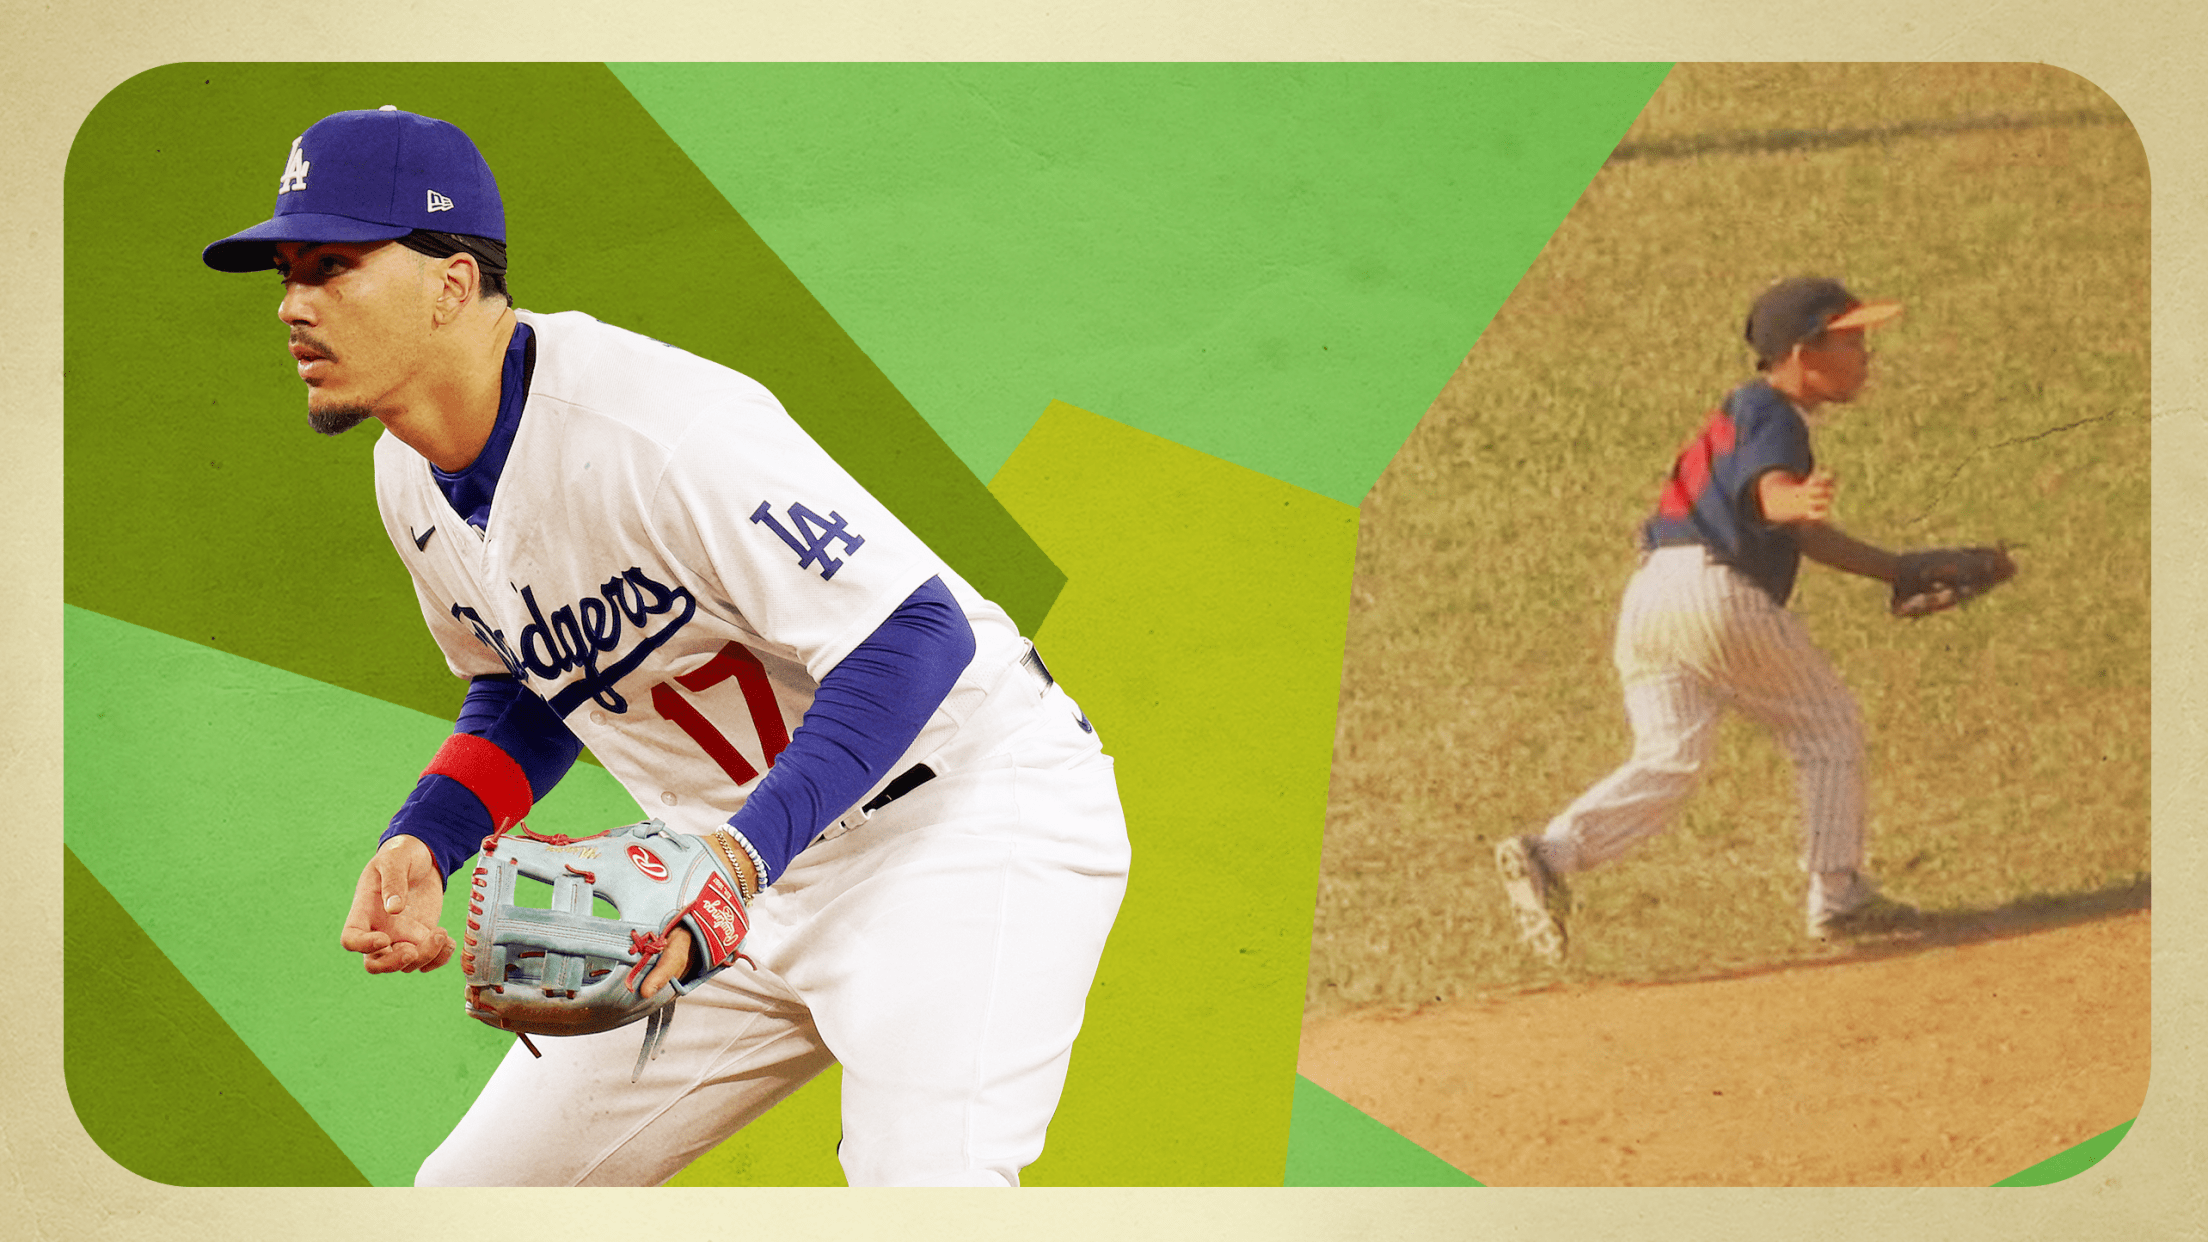 Miguel Vargas, Lazaro Vargas connect through baseball journeys